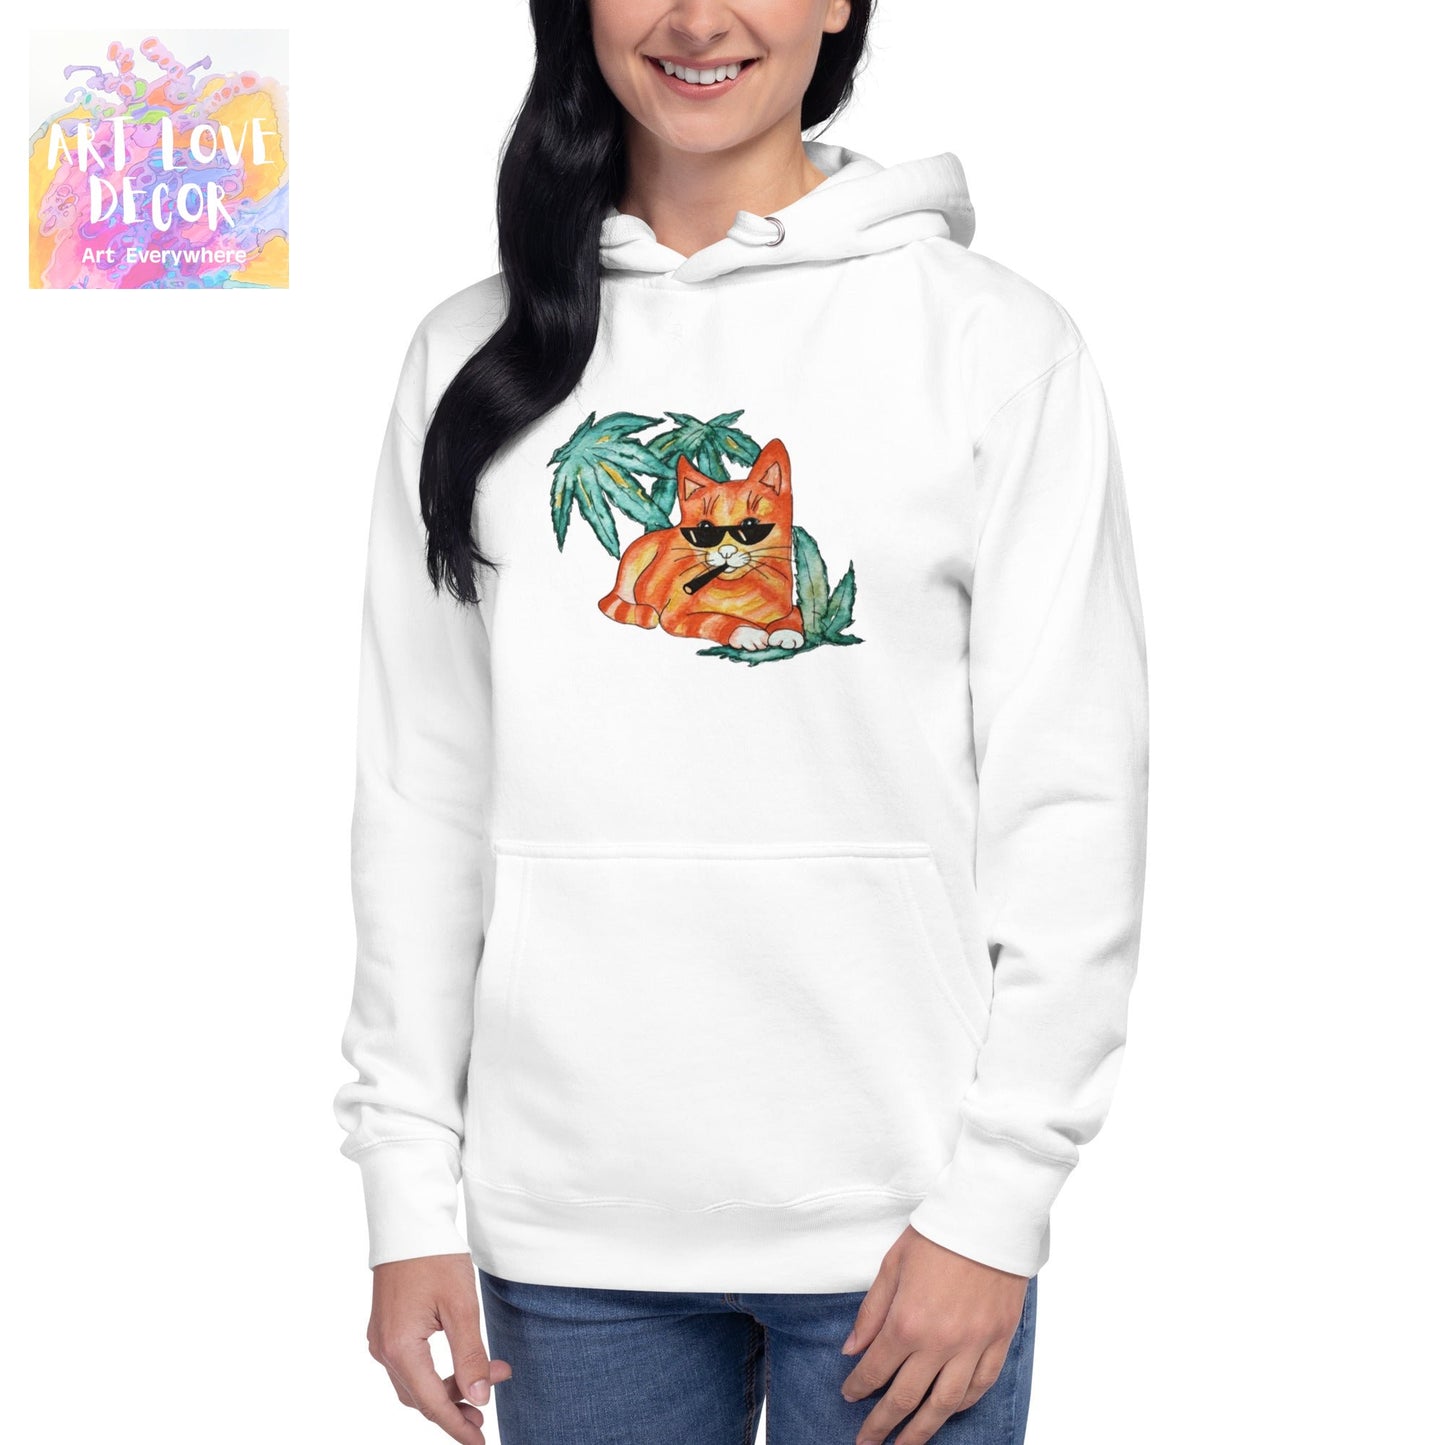 Cool Ginger Cat Women's Sweatshirt - Art Love Decor